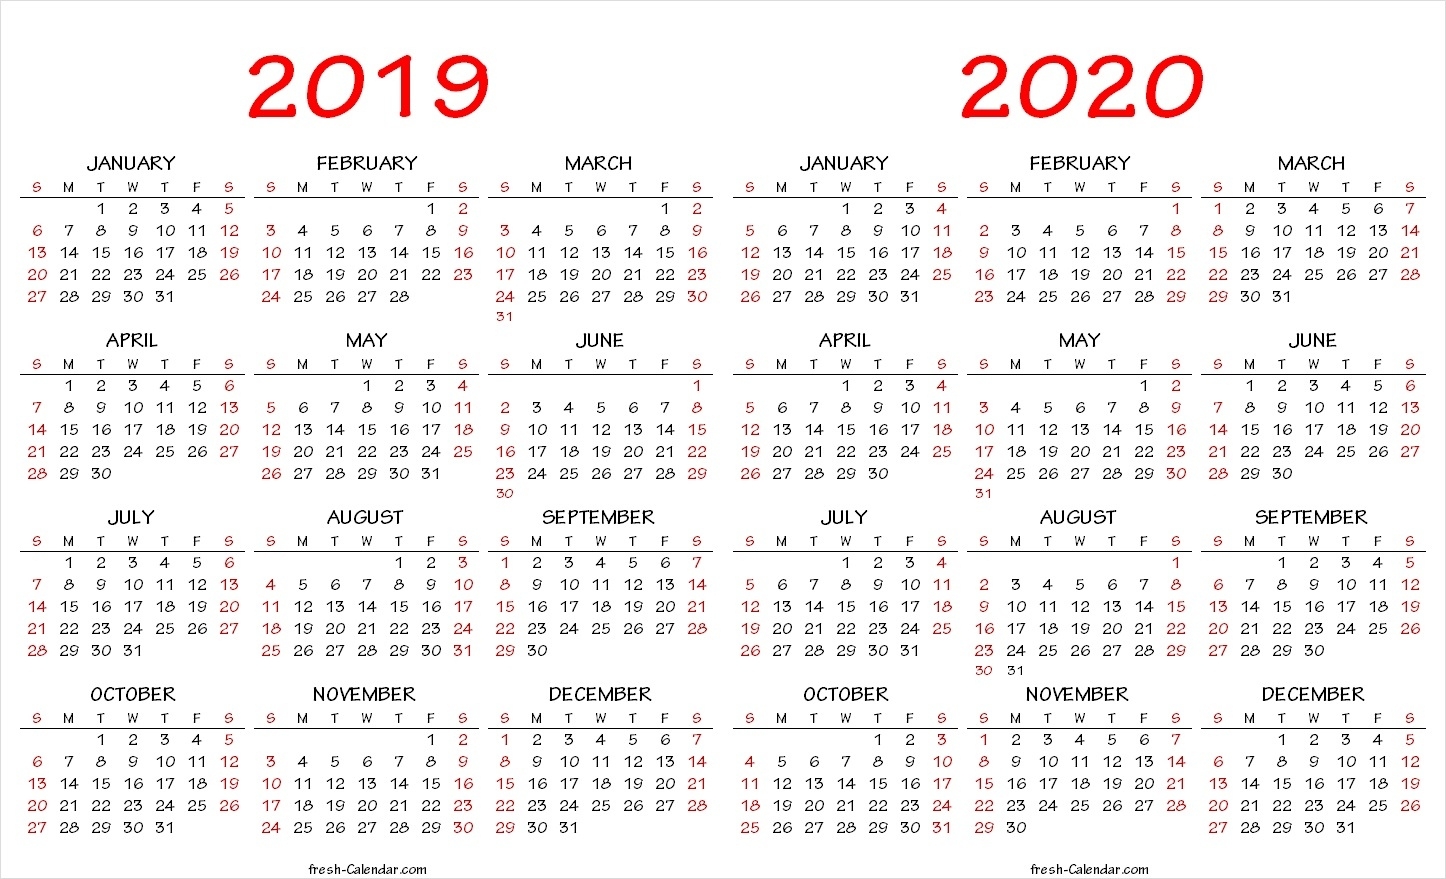 2020 Calendar Wallpapers - Wallpaper Cave 4 Year Calendar 2019 To 2020